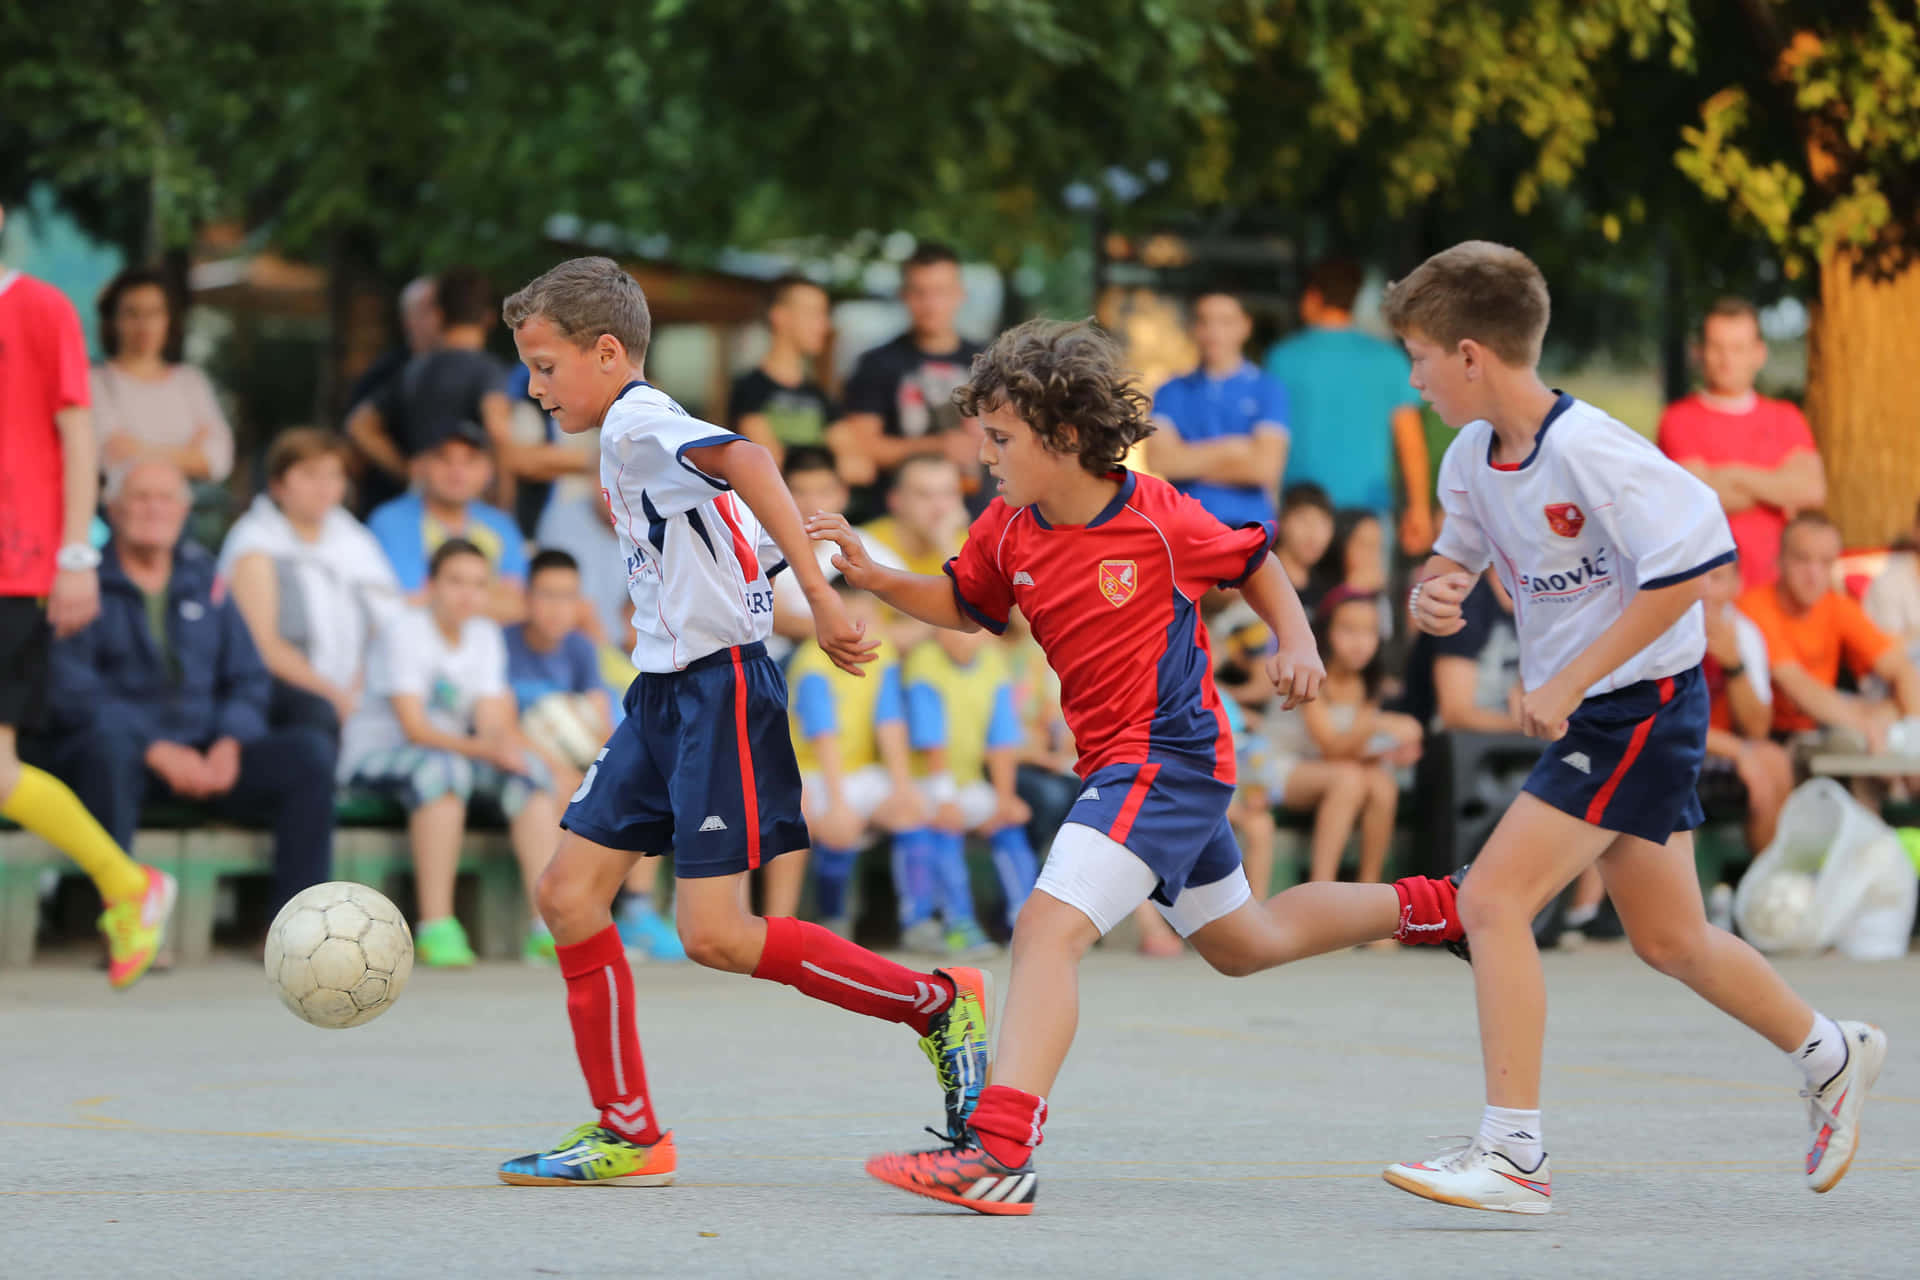 Youth Soccer Match Action.jpg Wallpaper